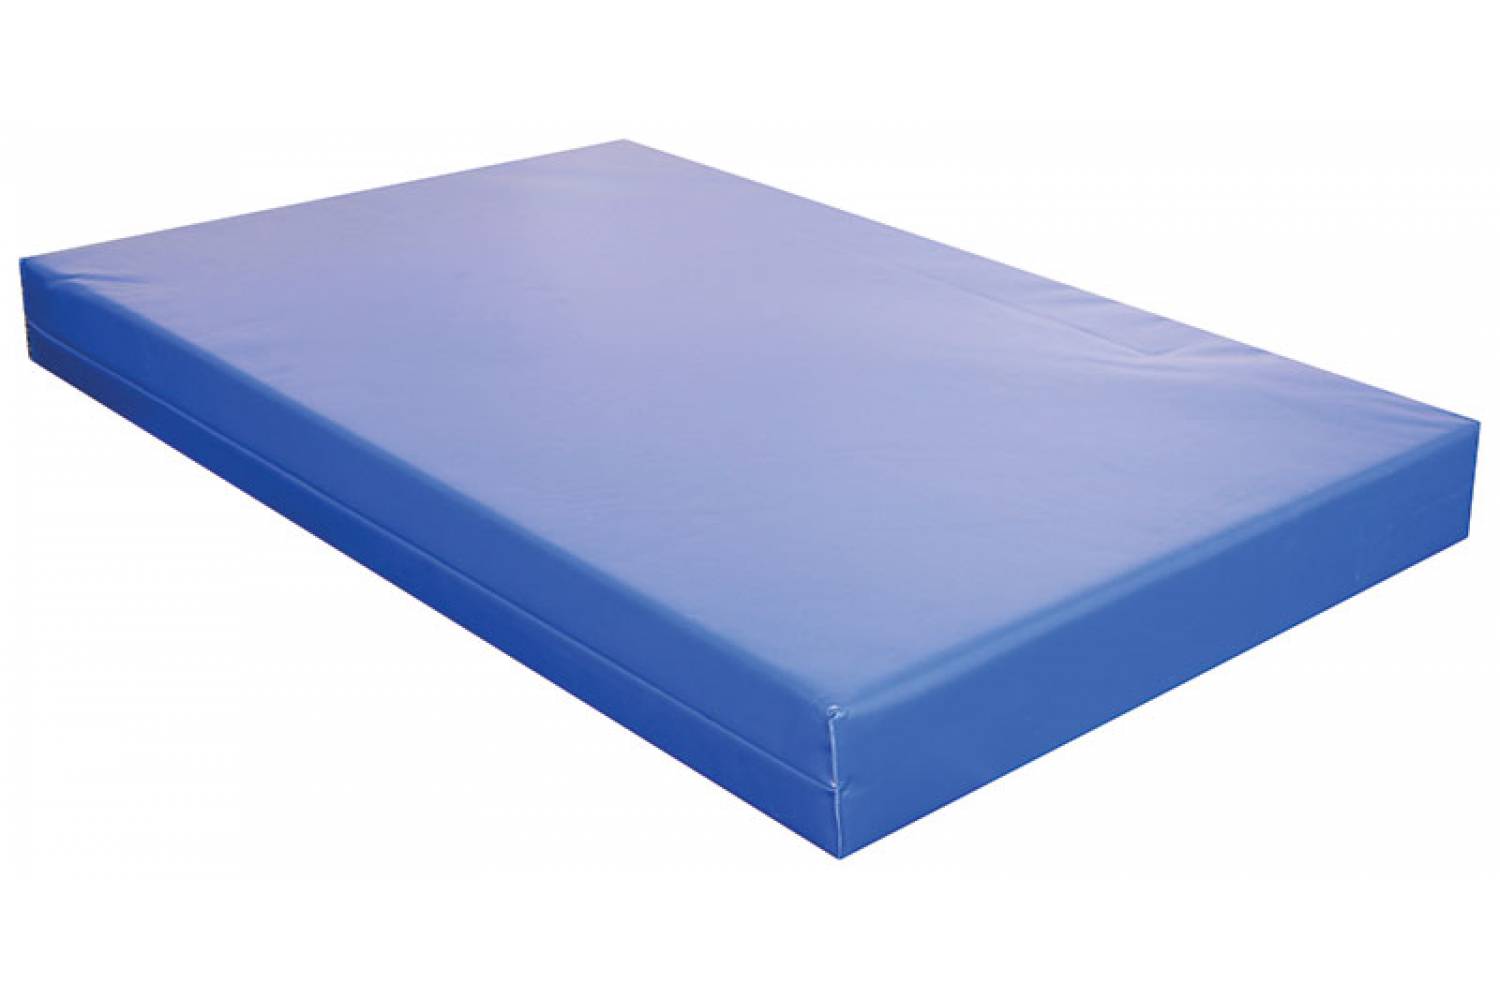 target waterproof cot mattress protector